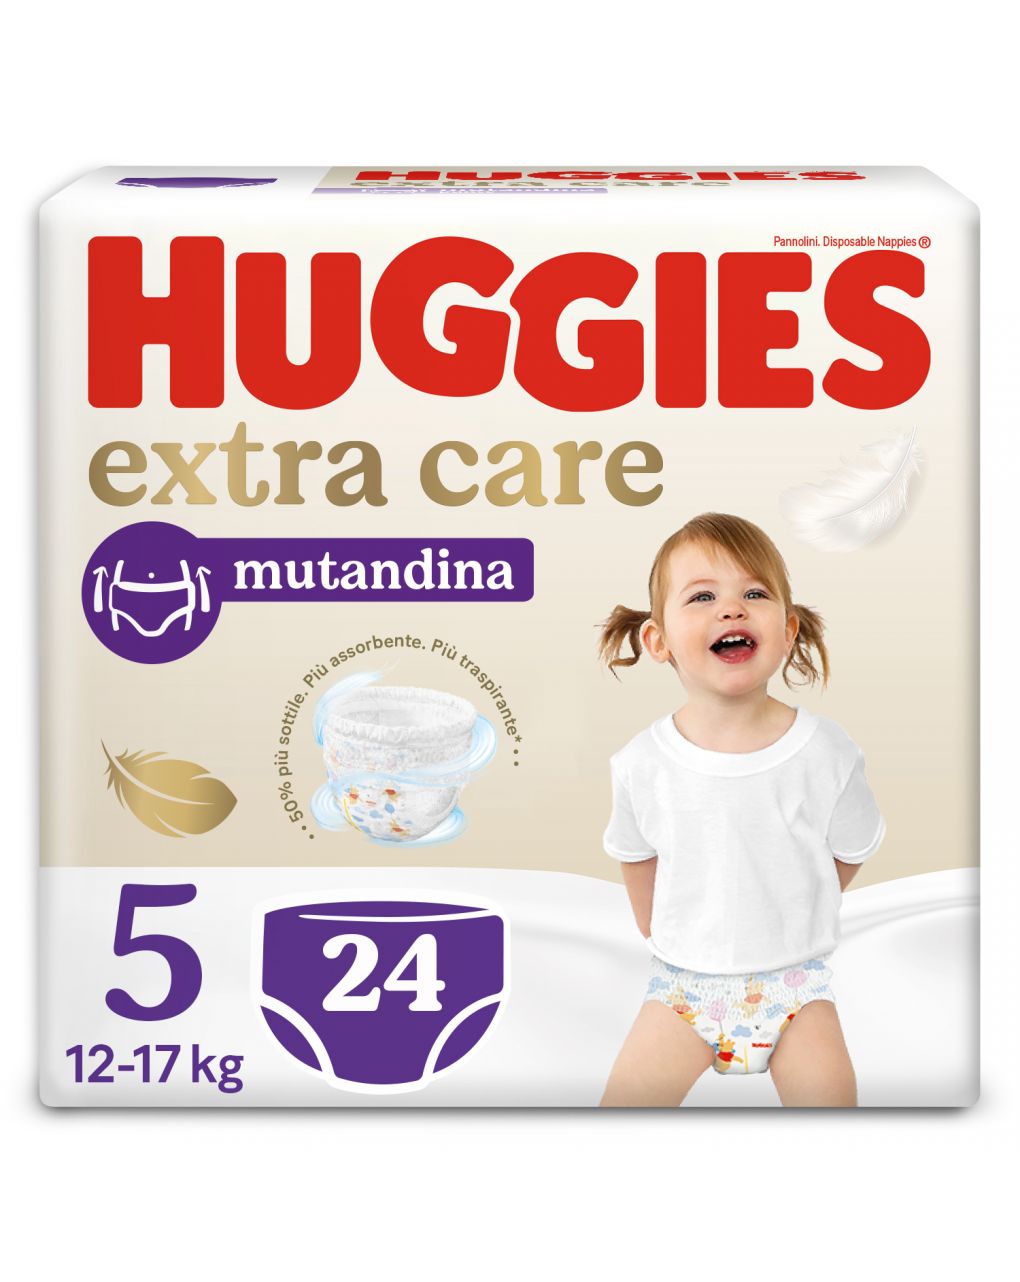 Pannolini huggies extra care mutandina tg. 5 (12-17 kg) - formato da 24 pannolini